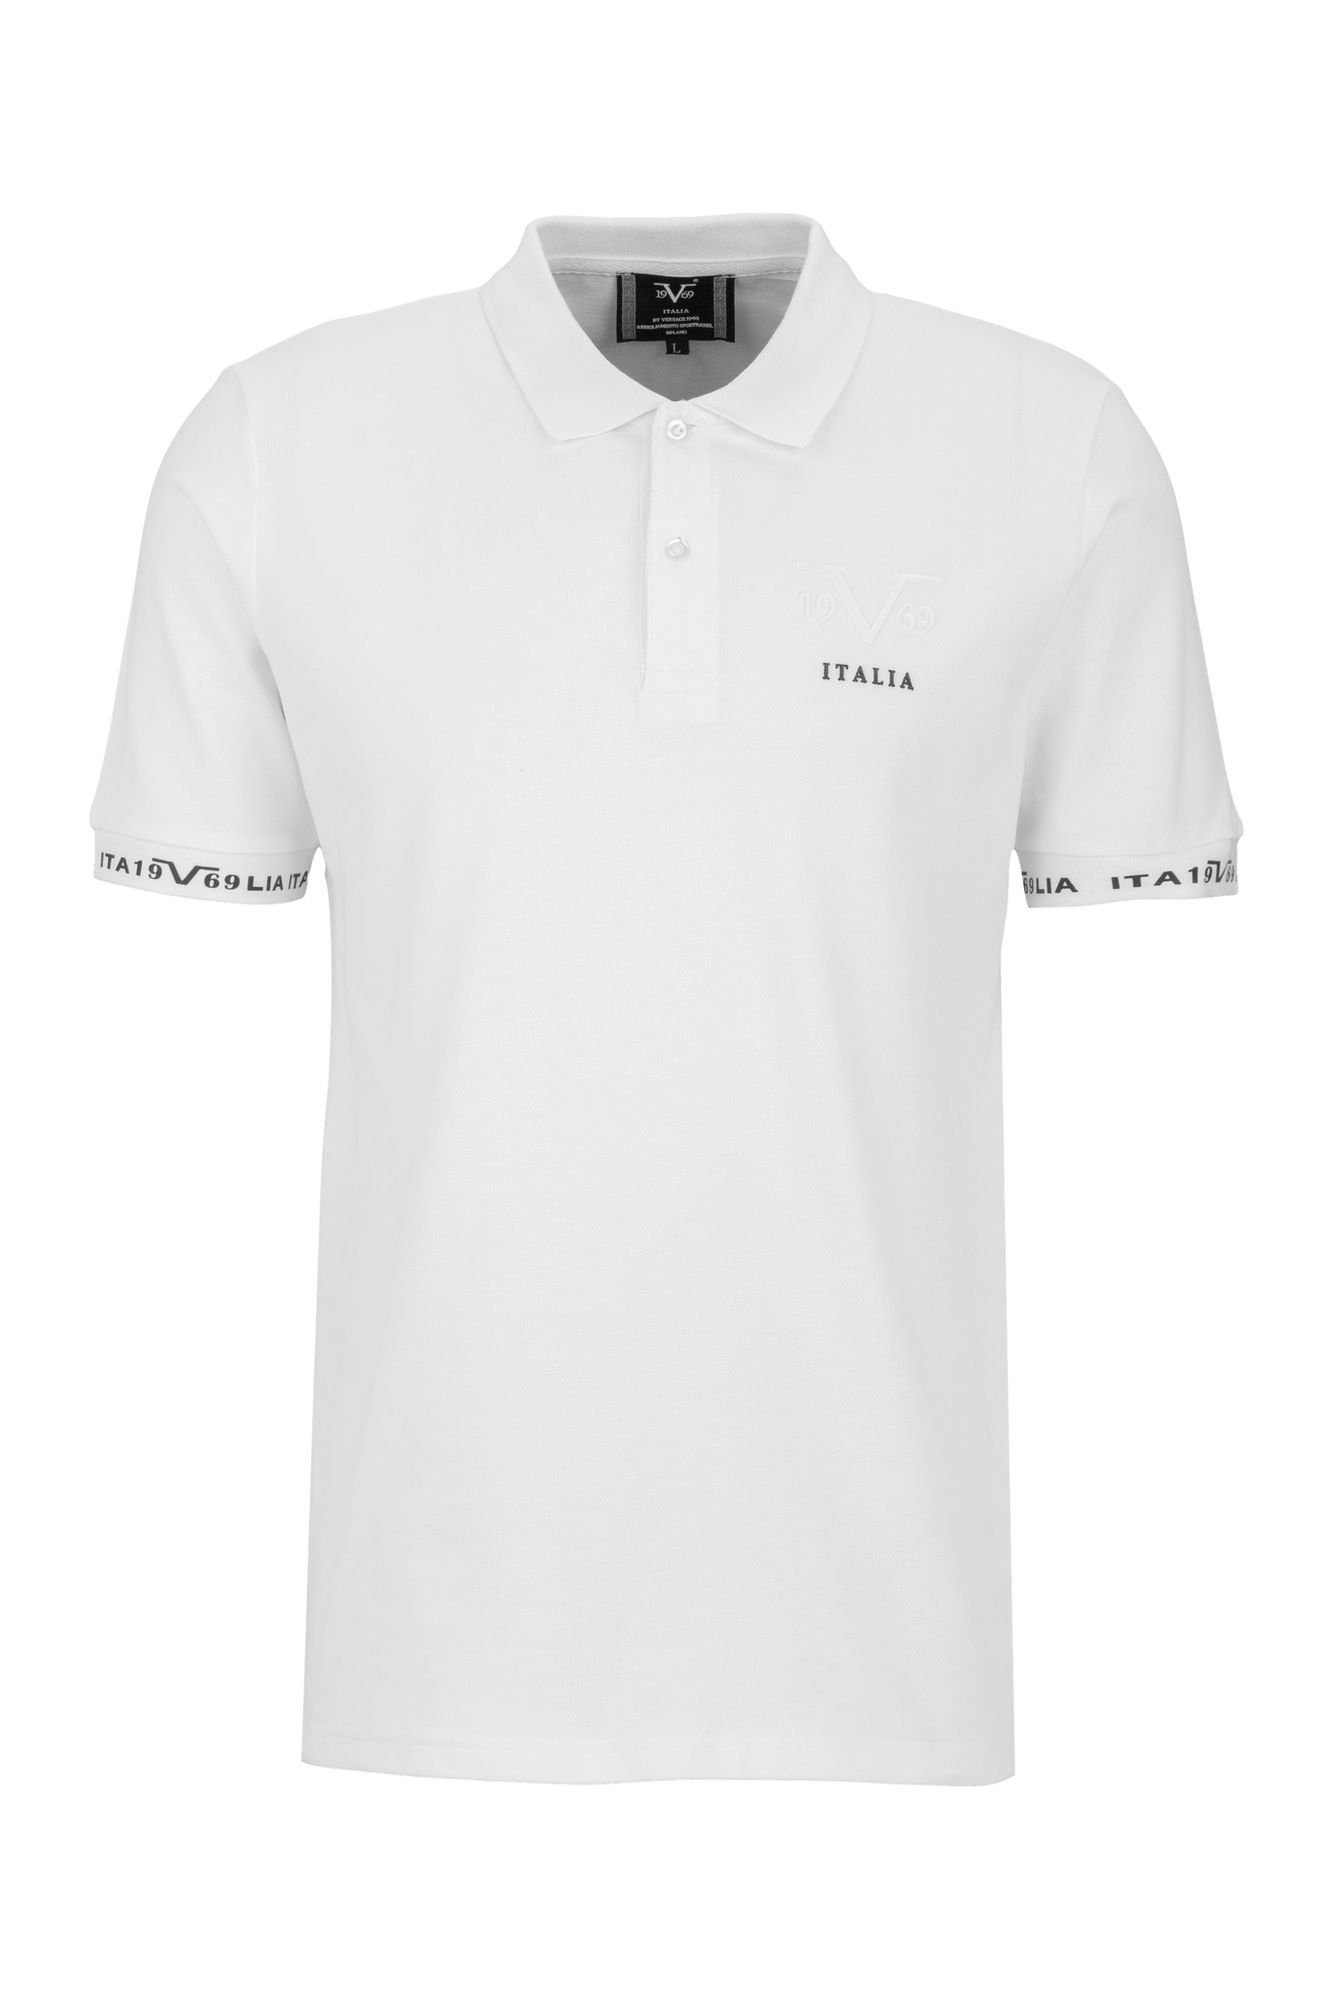 WHITE 19V69 Versace Harry Italia by T-Shirt